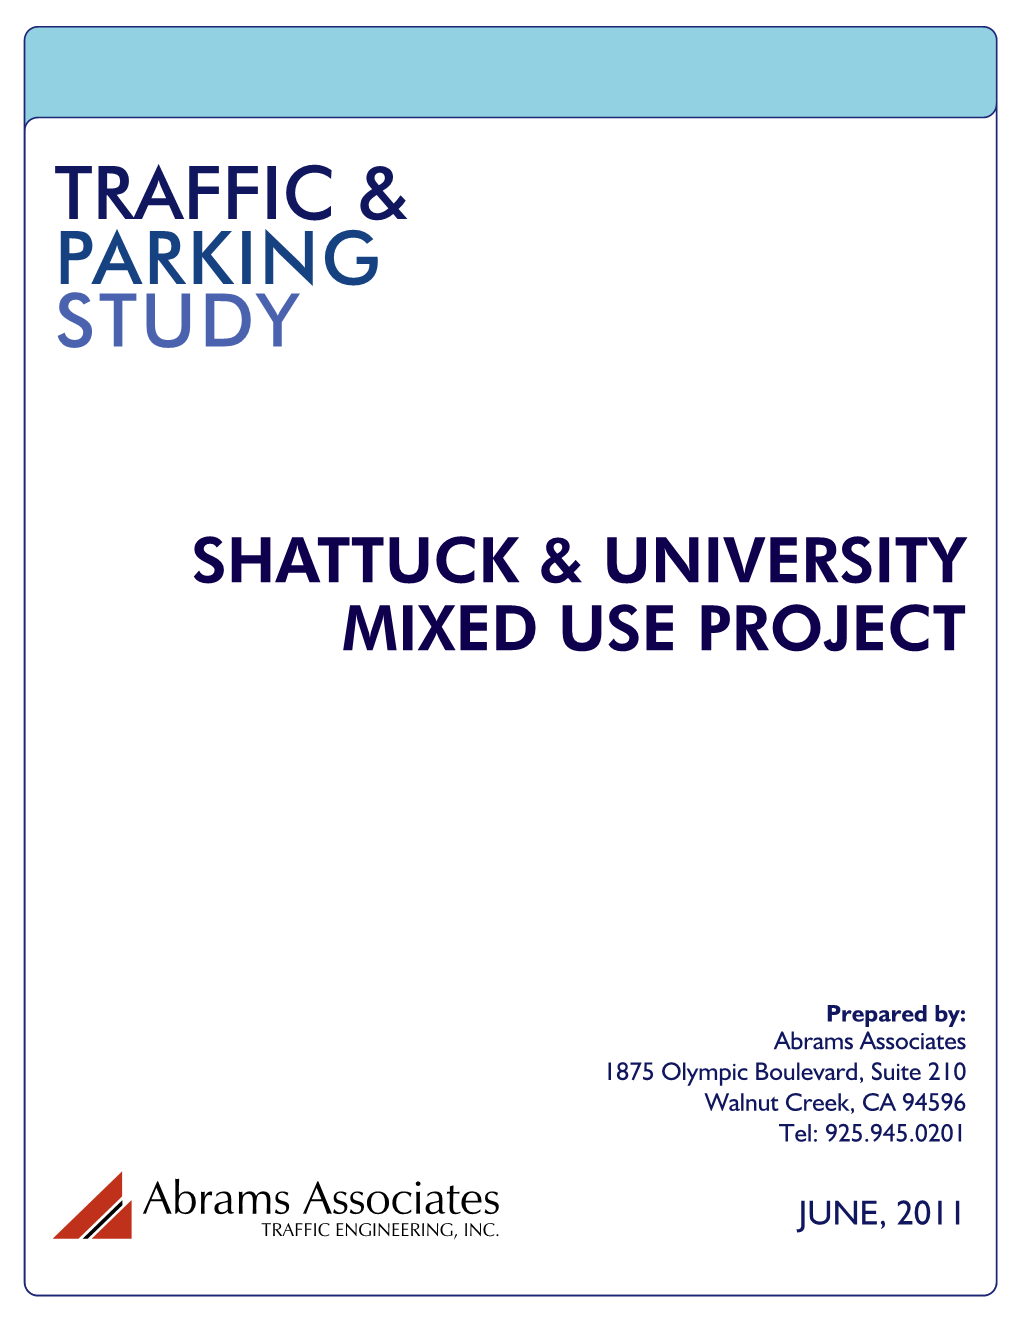 Traffic & Parking Study